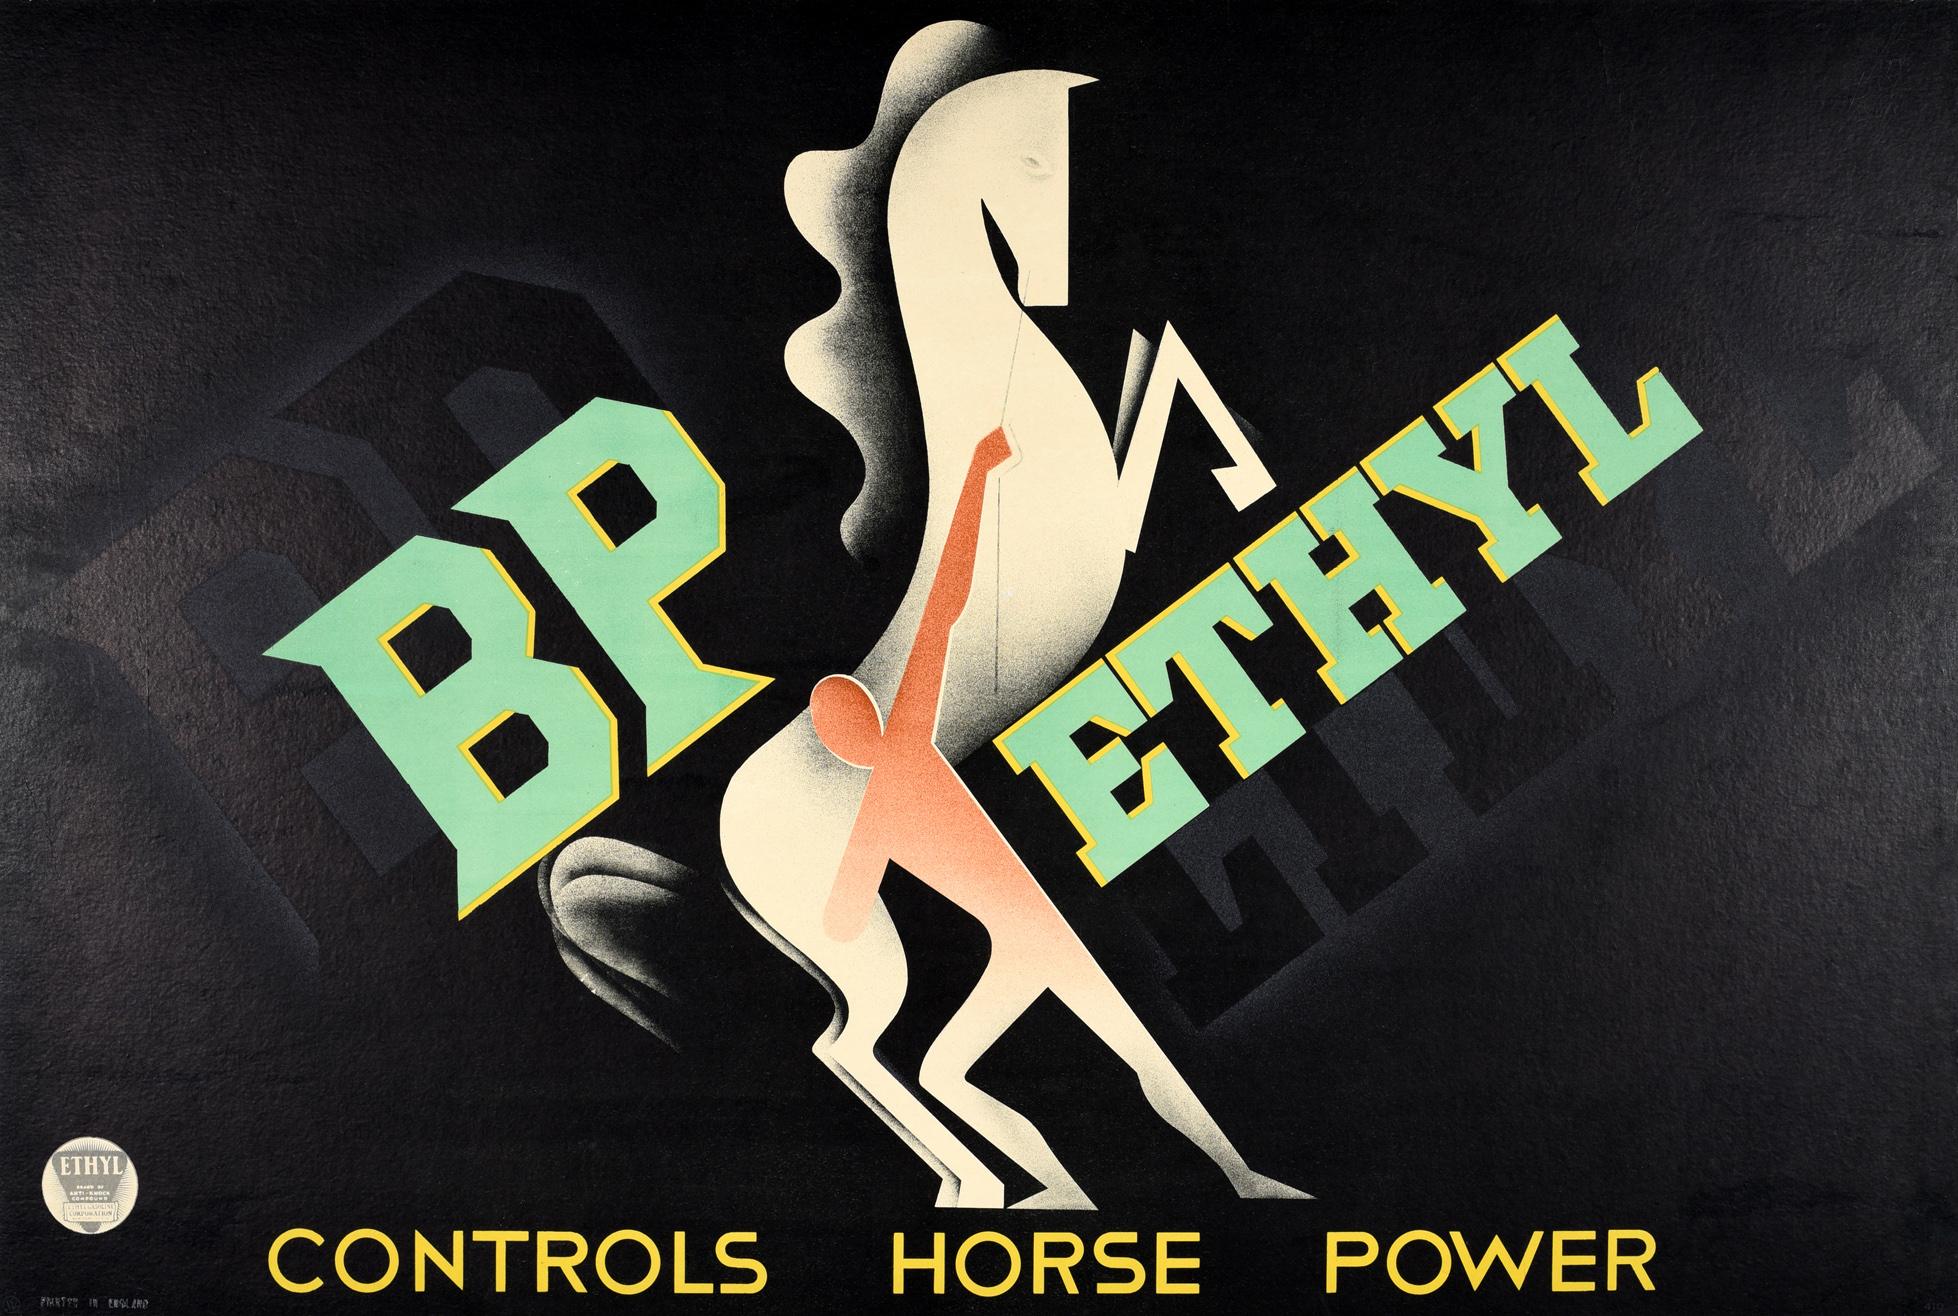 Original Vintage Poster BP Ethyl Controls Horse Power Modernist Art Deco Design